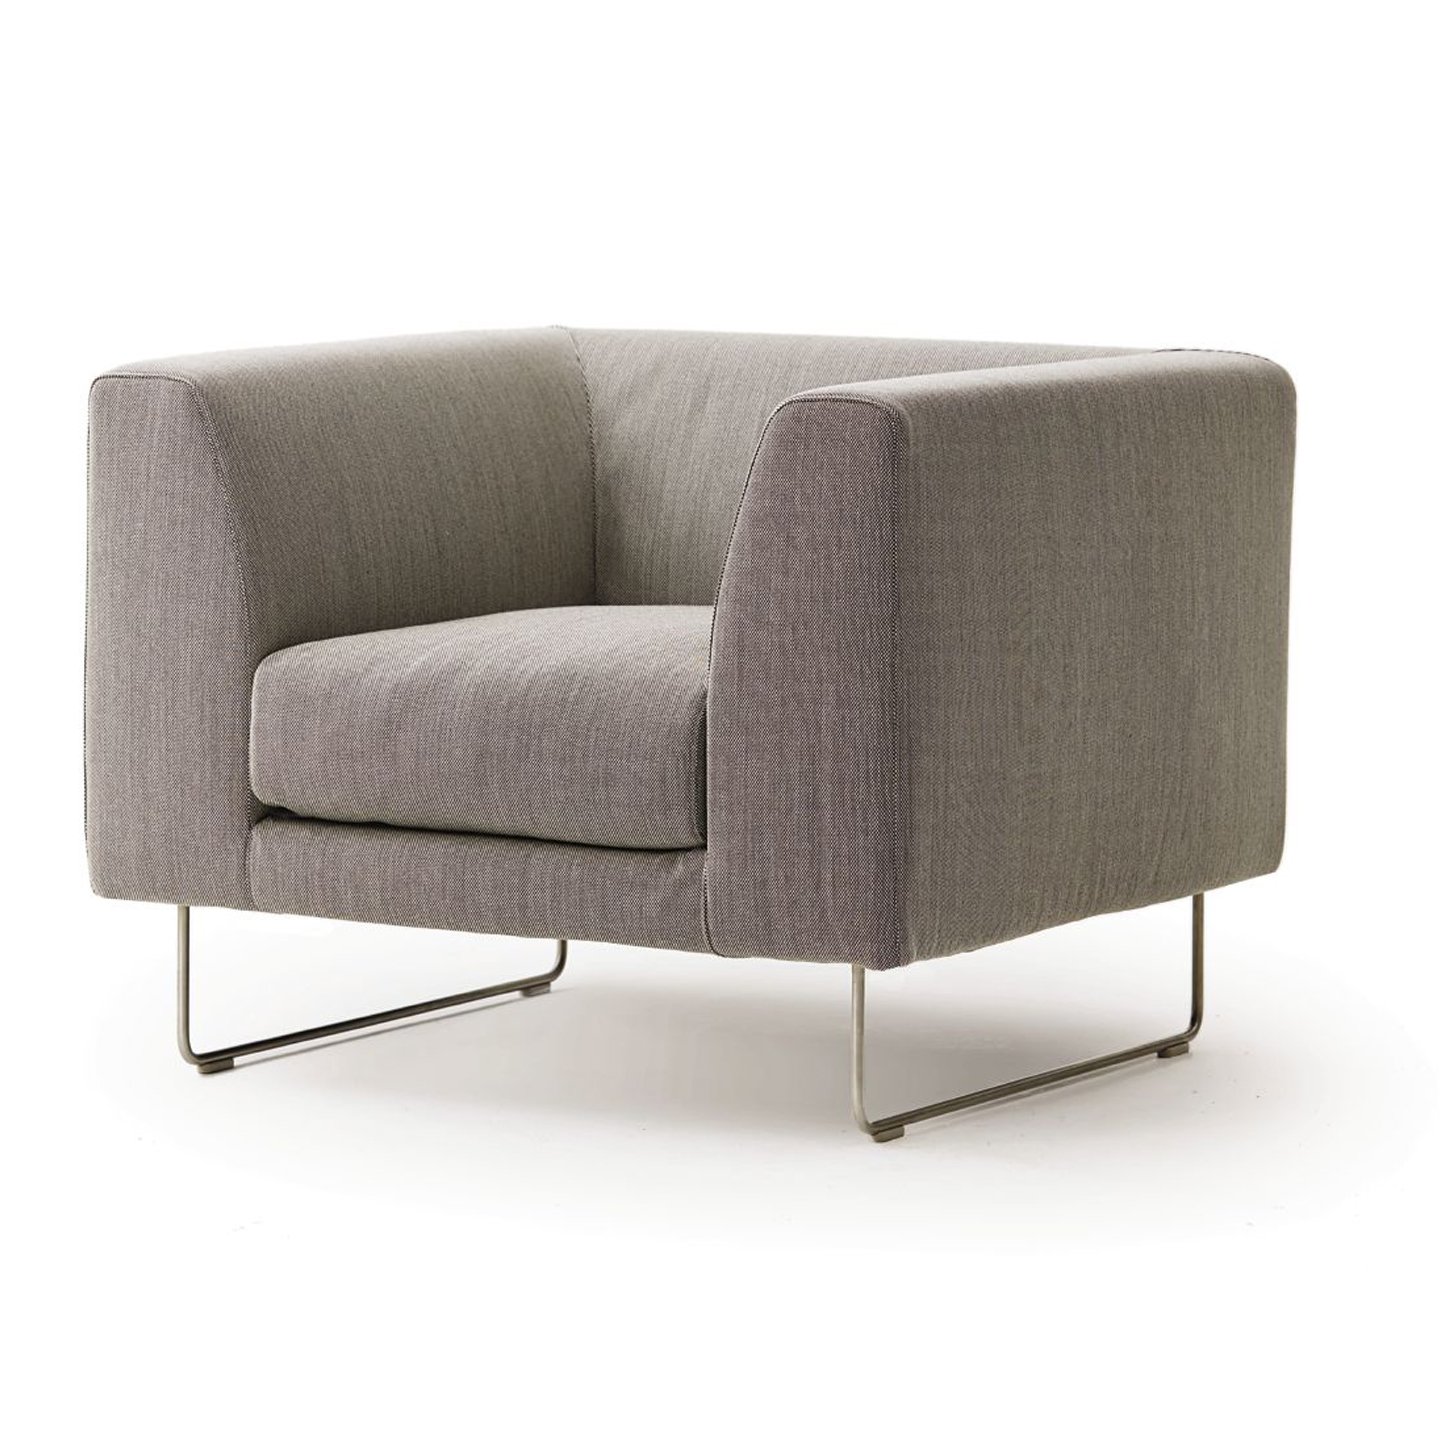 Haworth Elan lounge chair in grey upholstery with metal legs